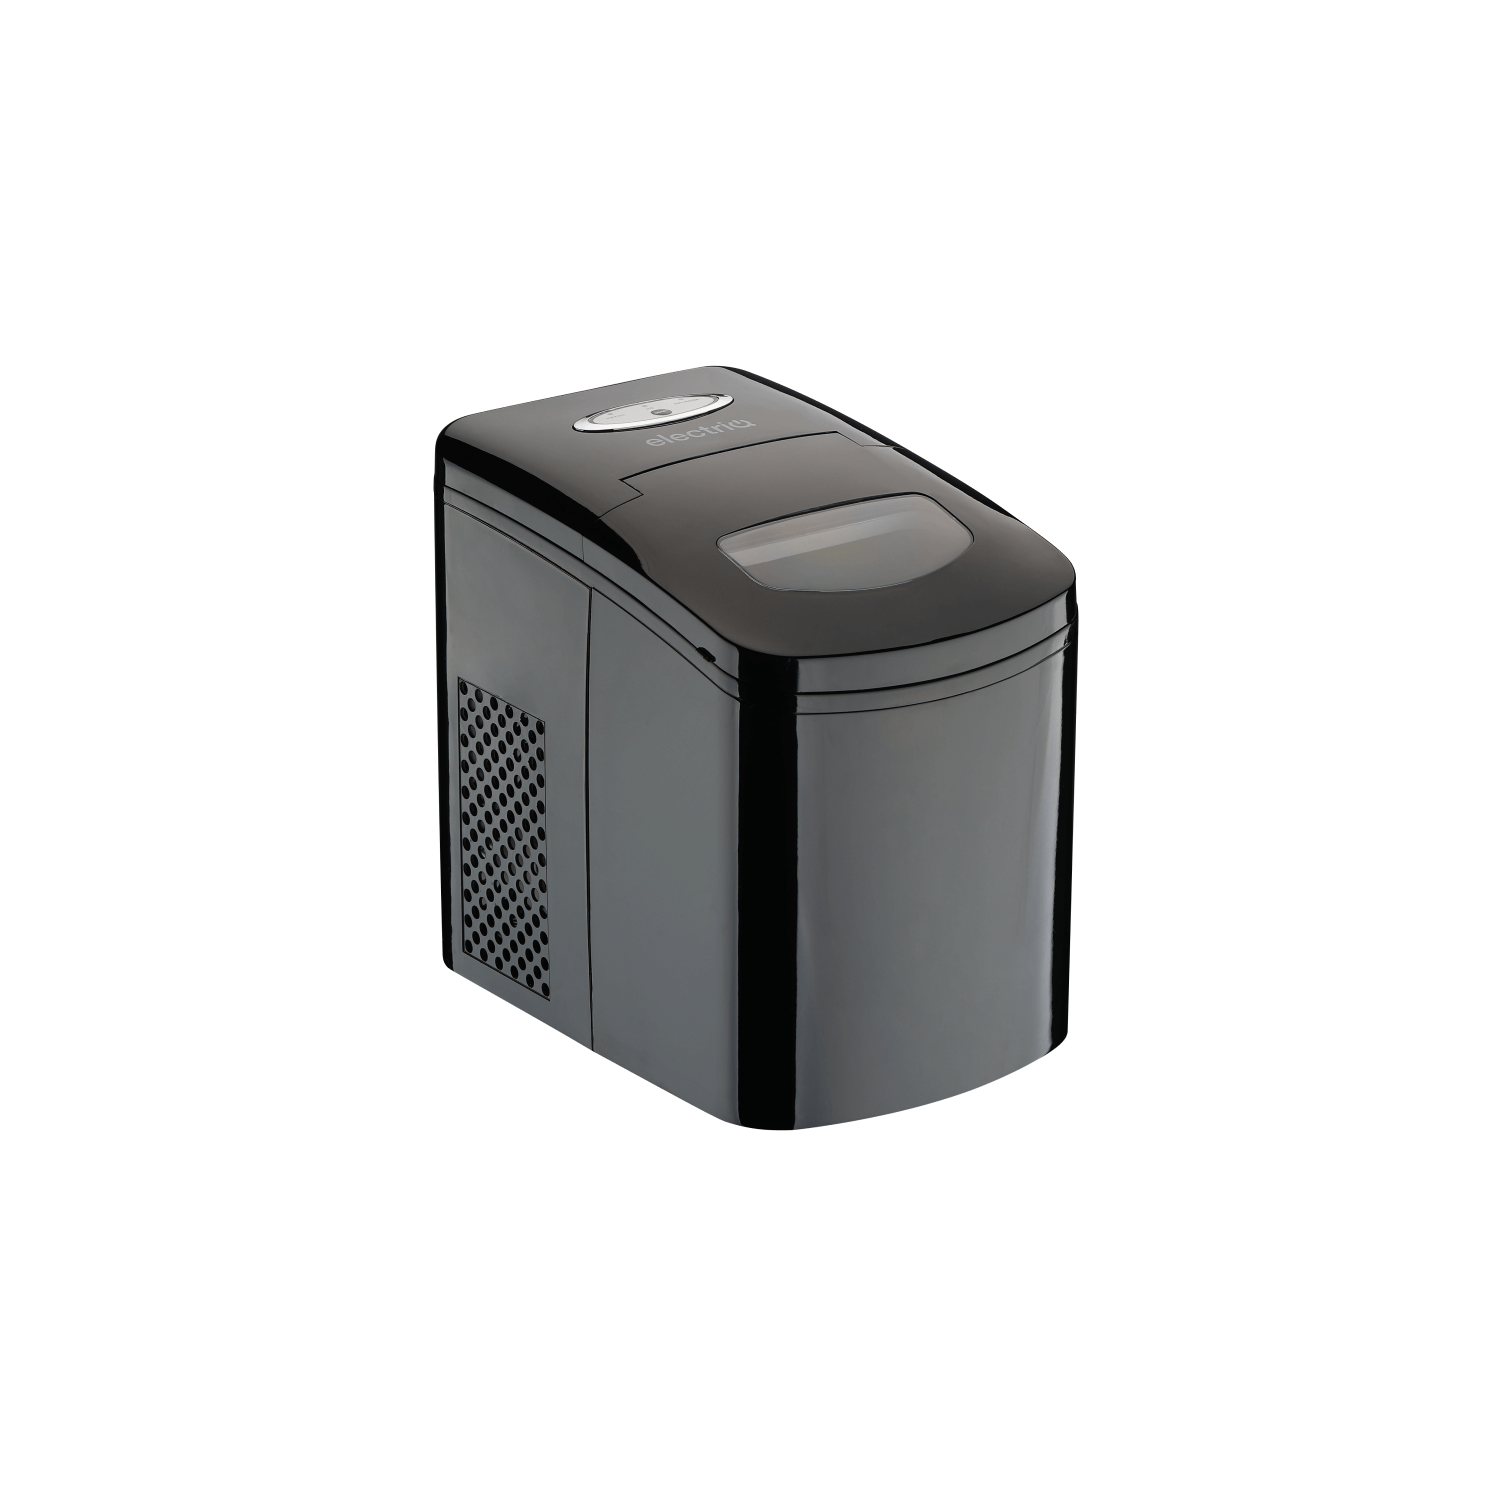 Mini Portable Compact Electric Ice Maker Machine - Black